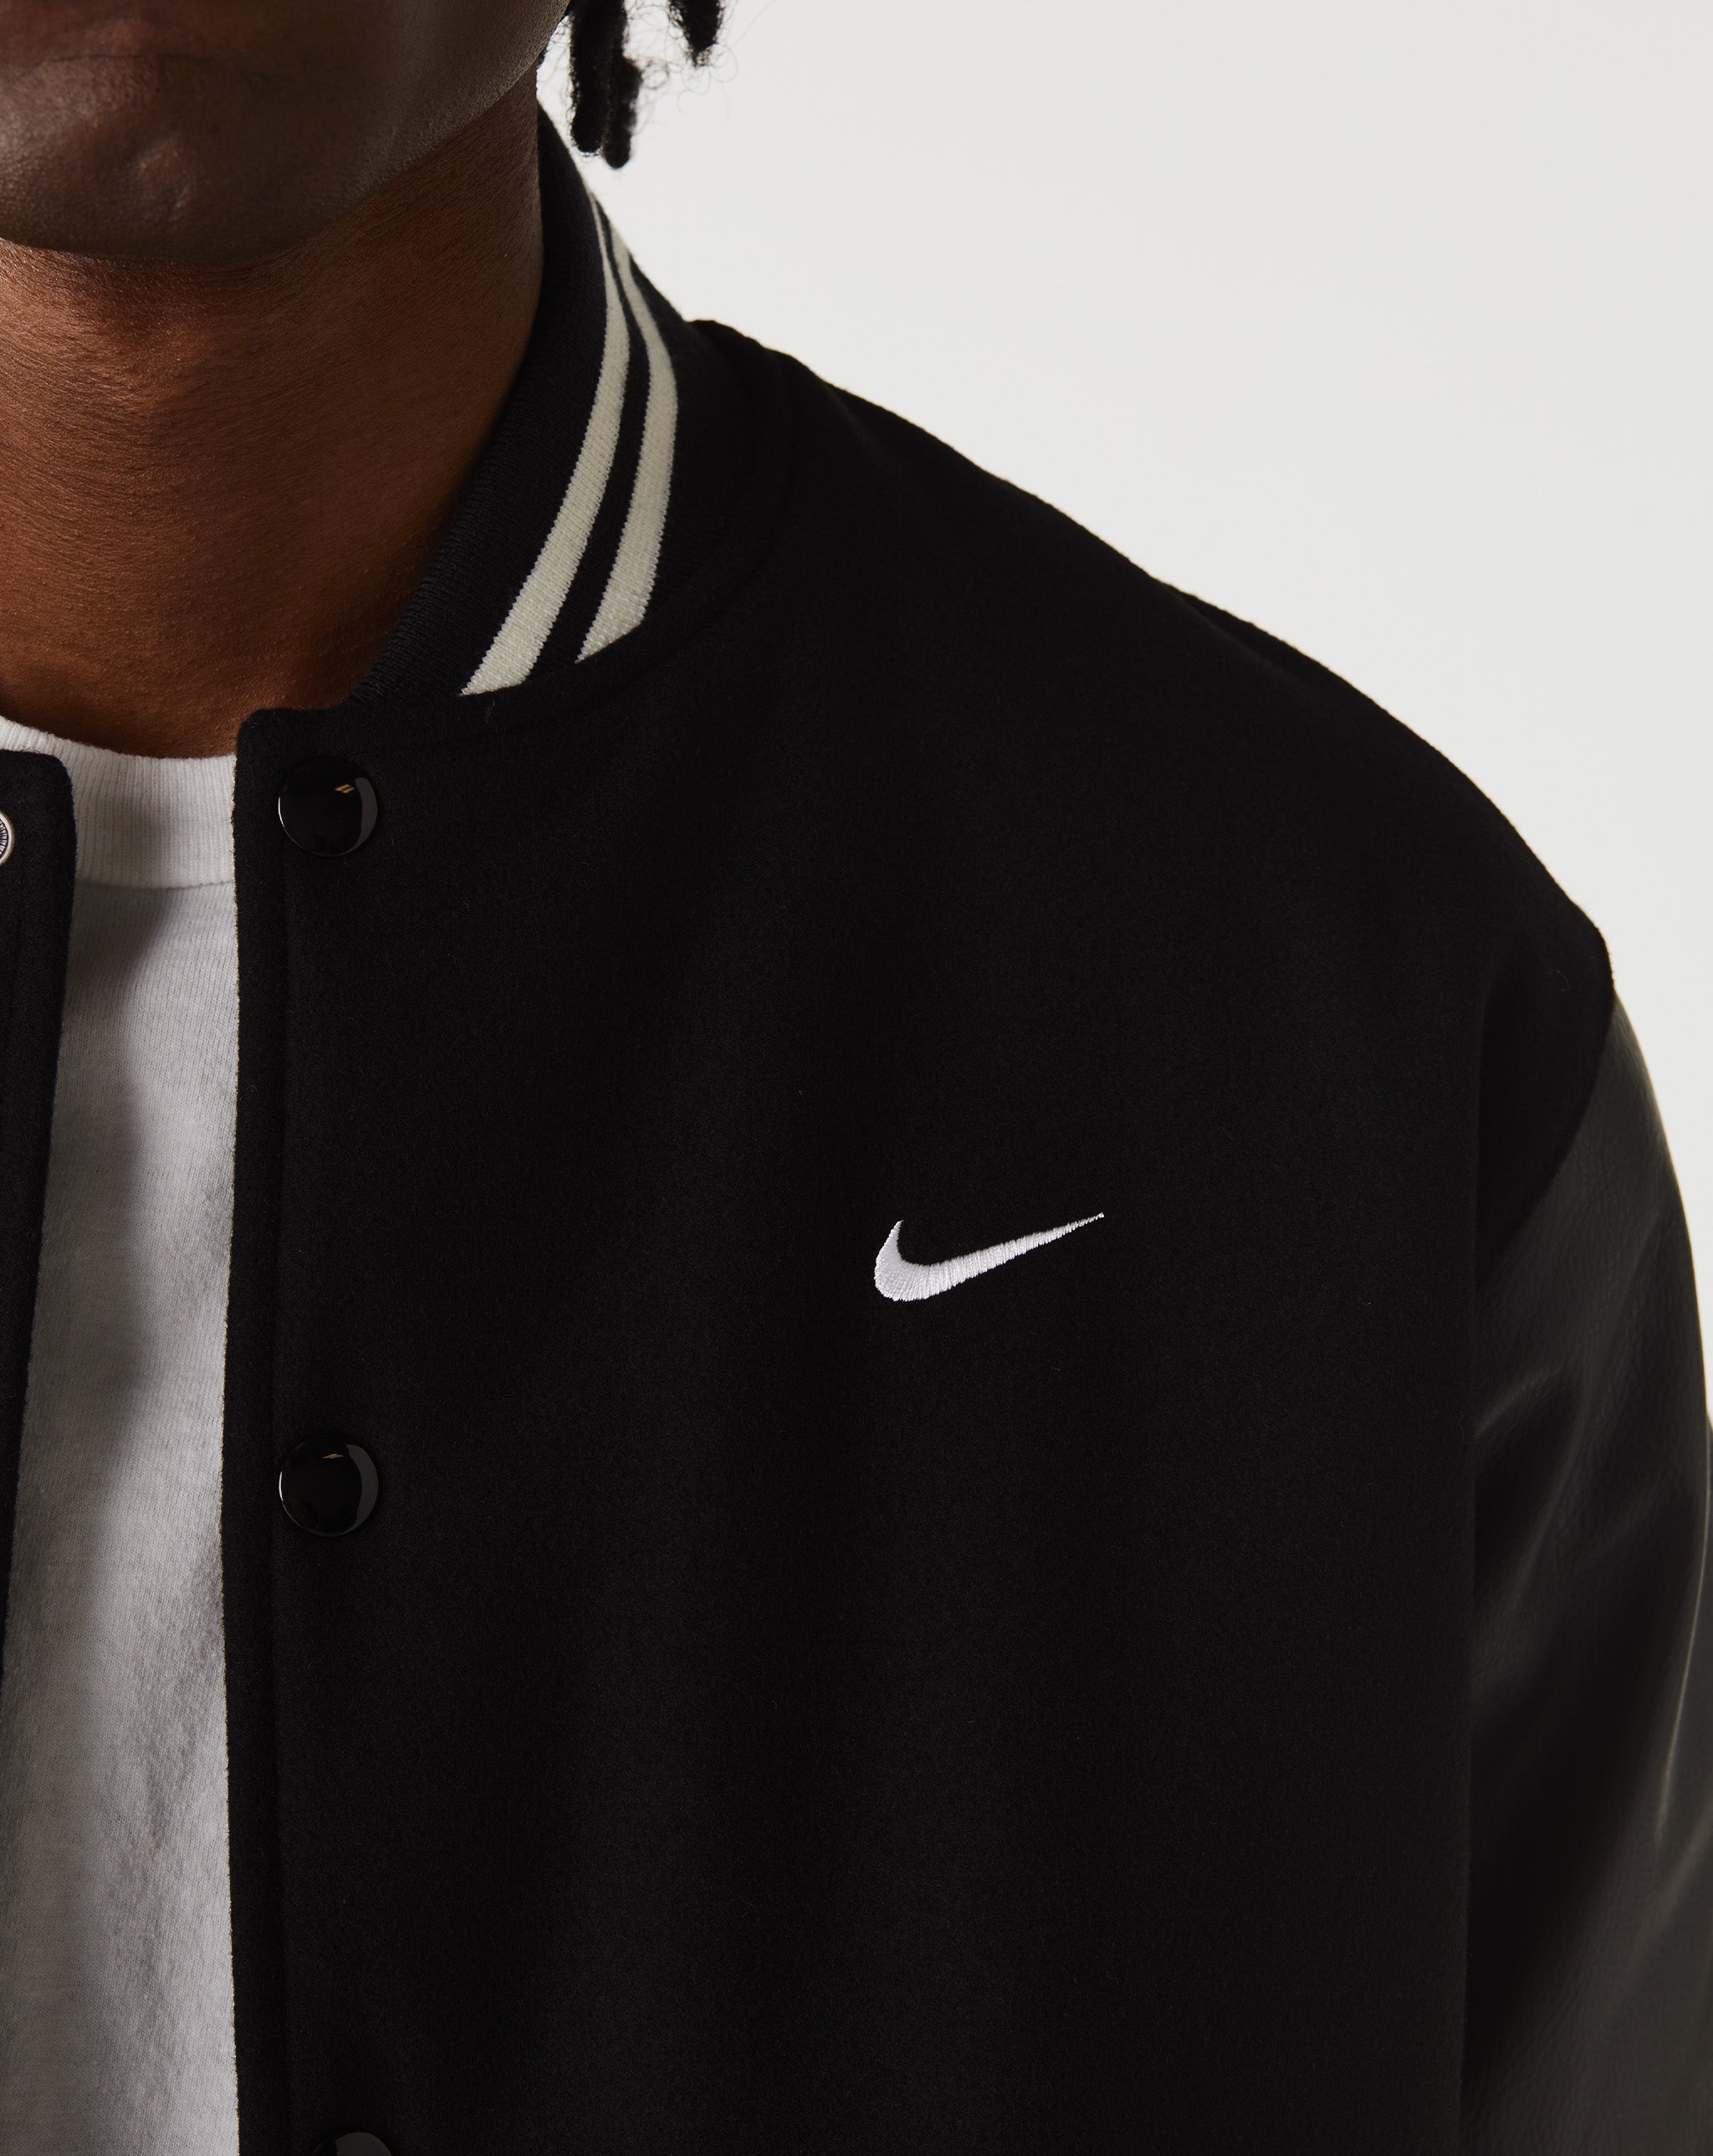 Nike Nike Authentics Varsity Jacket  - Cheap Erlebniswelt-fliegenfischen Jordan outlet